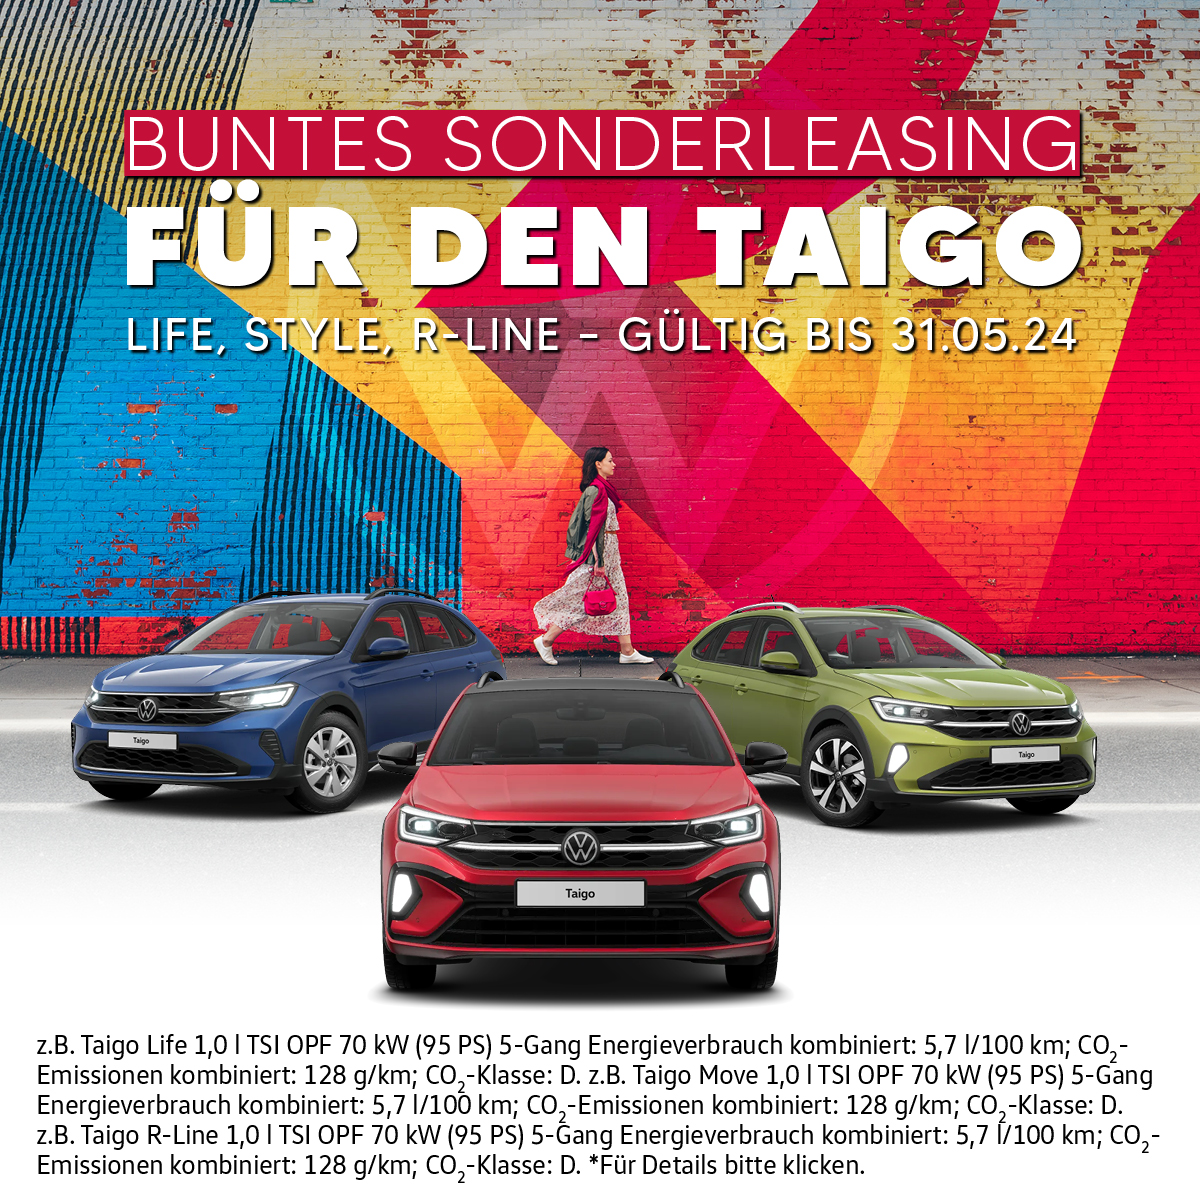 Taigo Sonderleasing Autohaus Moser buntes Beitragsbild SALE Angebot Leasing günstig